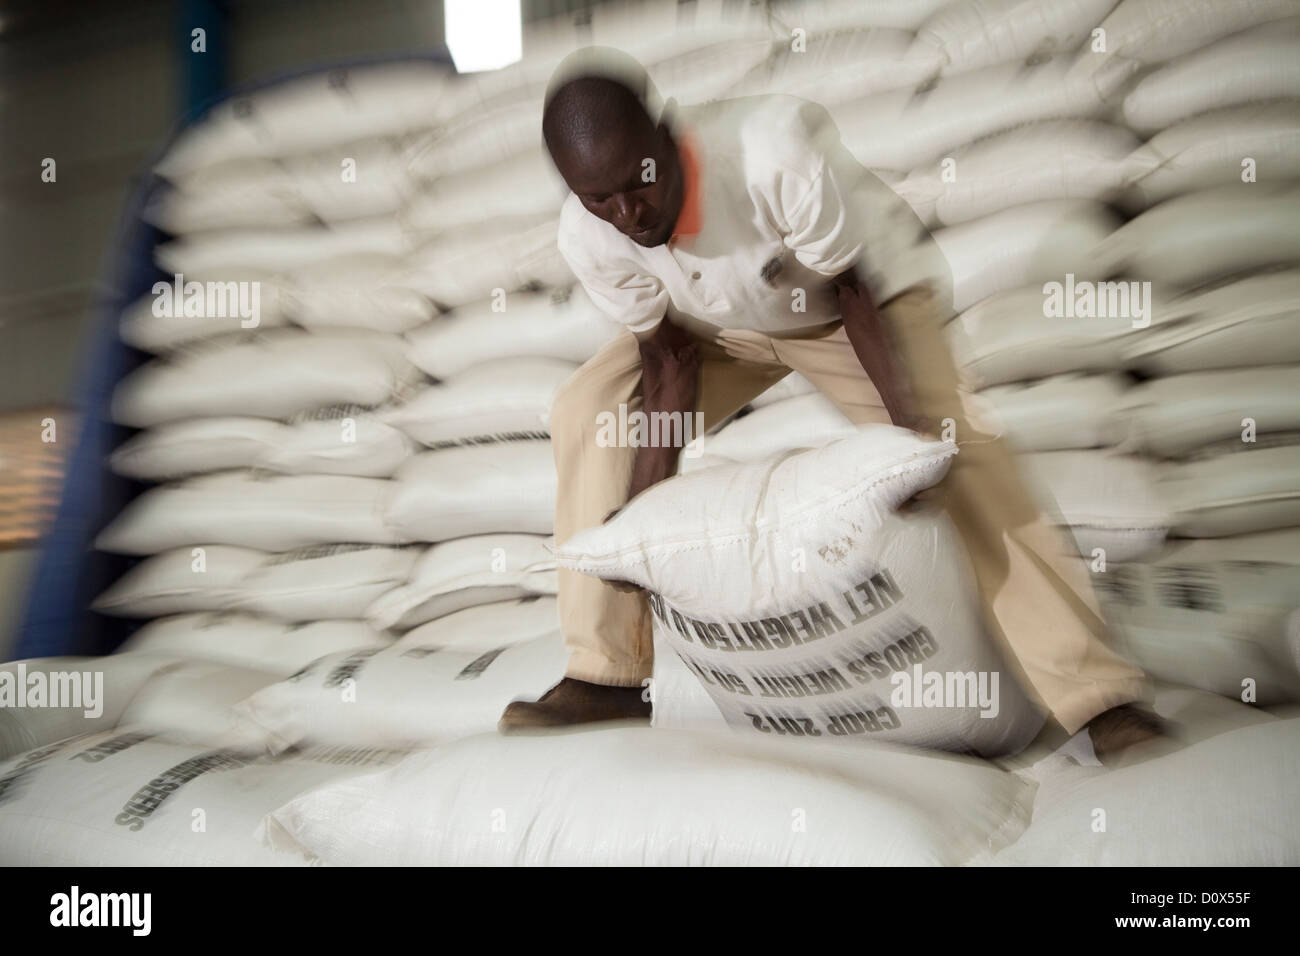 A worker loads sacks of corn at a warehouse in Kampala, Uganda, East Africa. Stock Photo